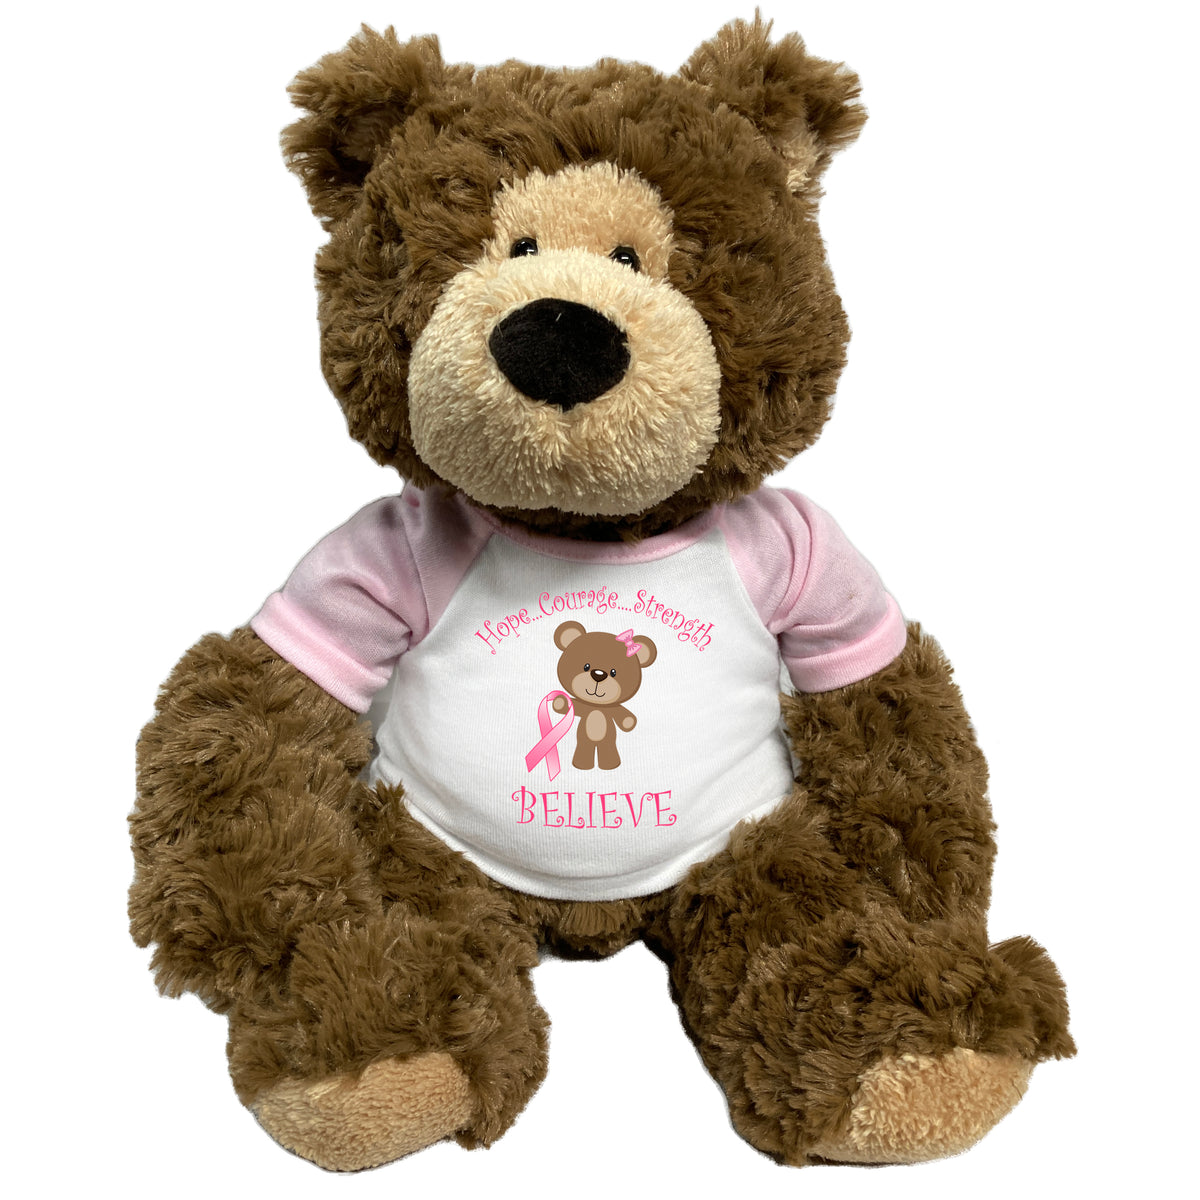 Breast Cancer Support Teddy Bear - Personalized 14 Inch Bear Hugs - Believe Design